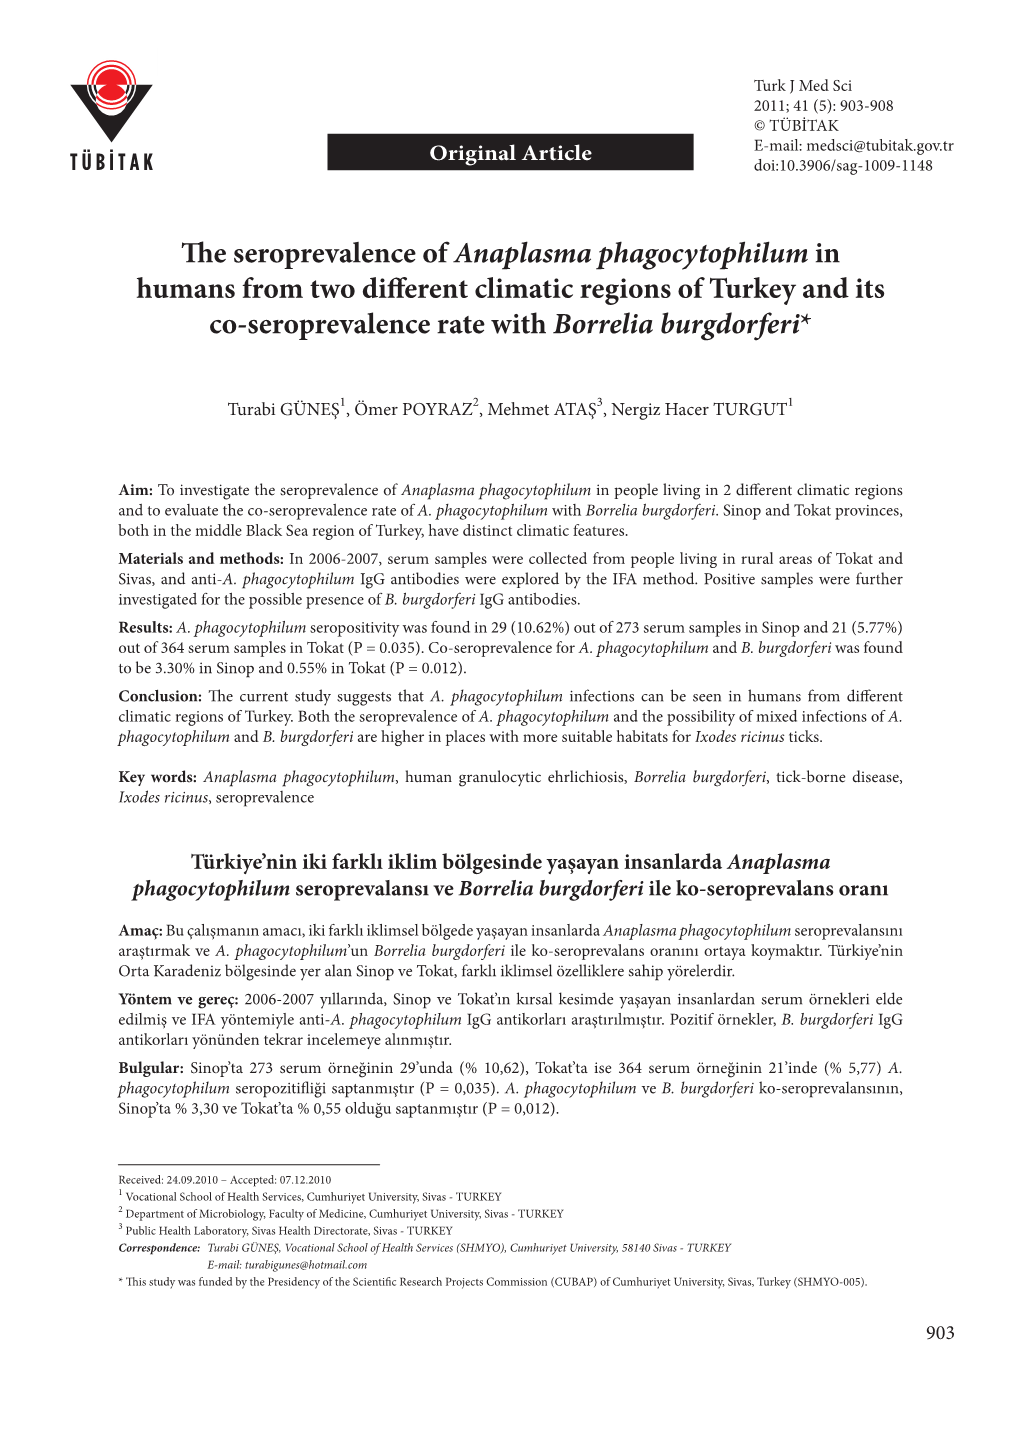 The Seroprevalence of Anaplasma Phagocytophilum in Humans From